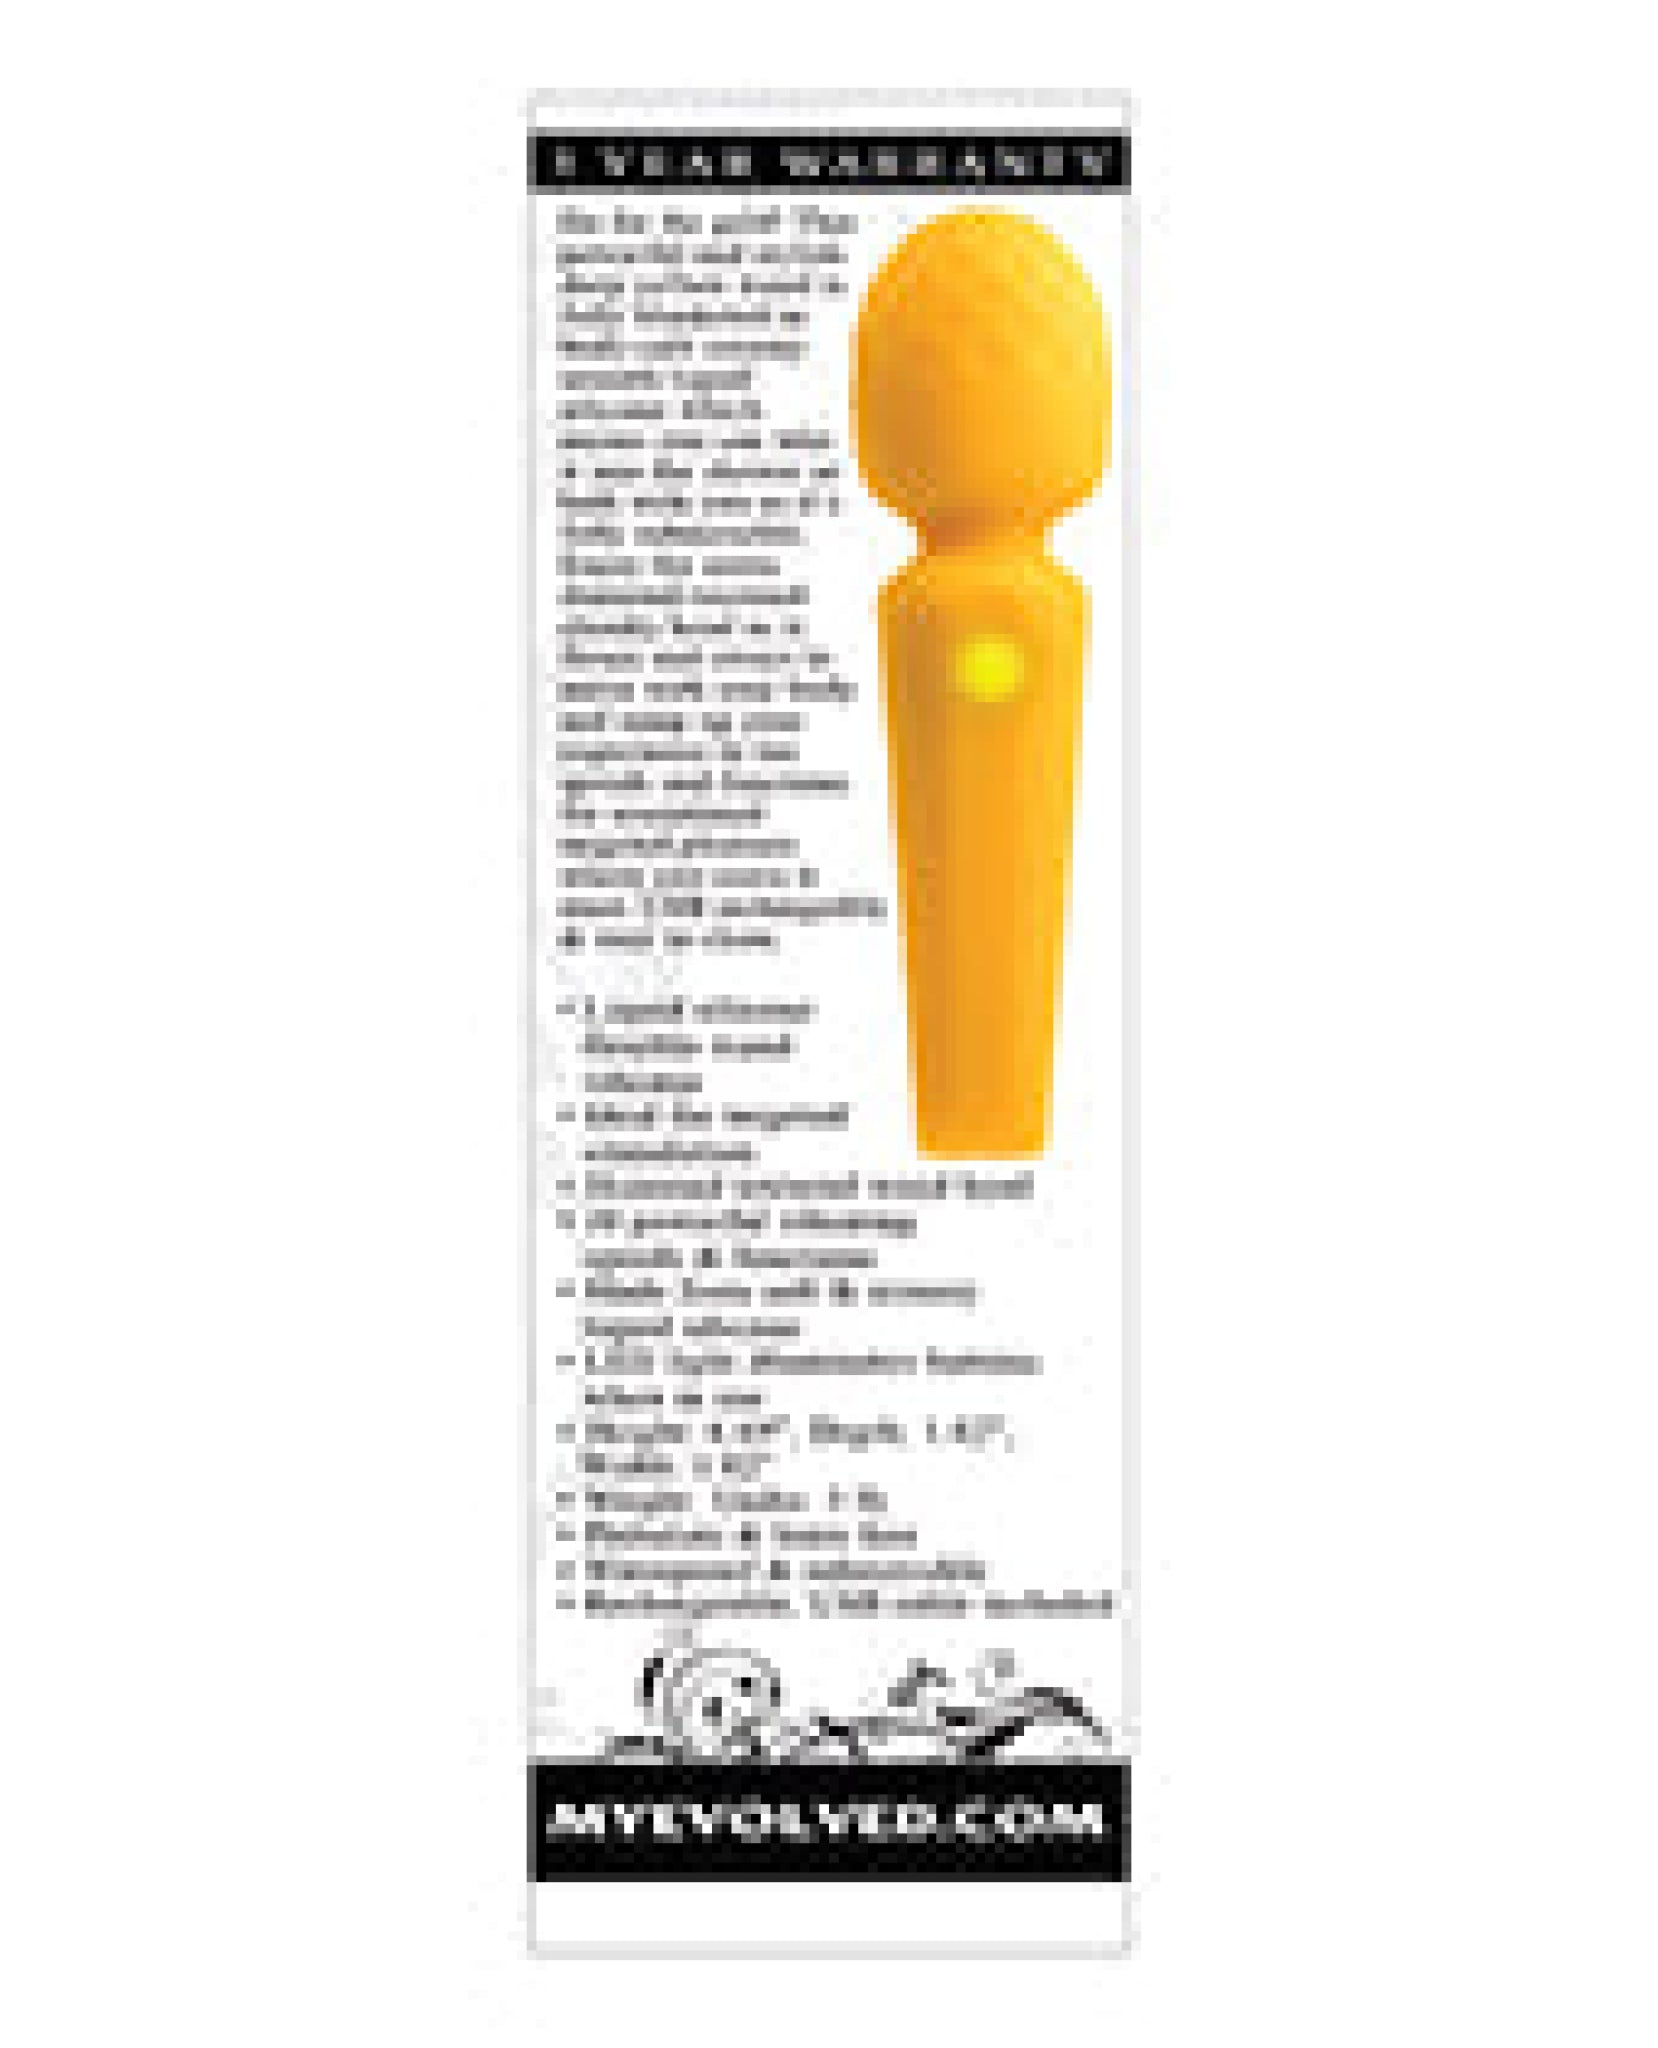 Evolved Sunshine Flexible Wand Vibrator - Yellow Evolved Novelties